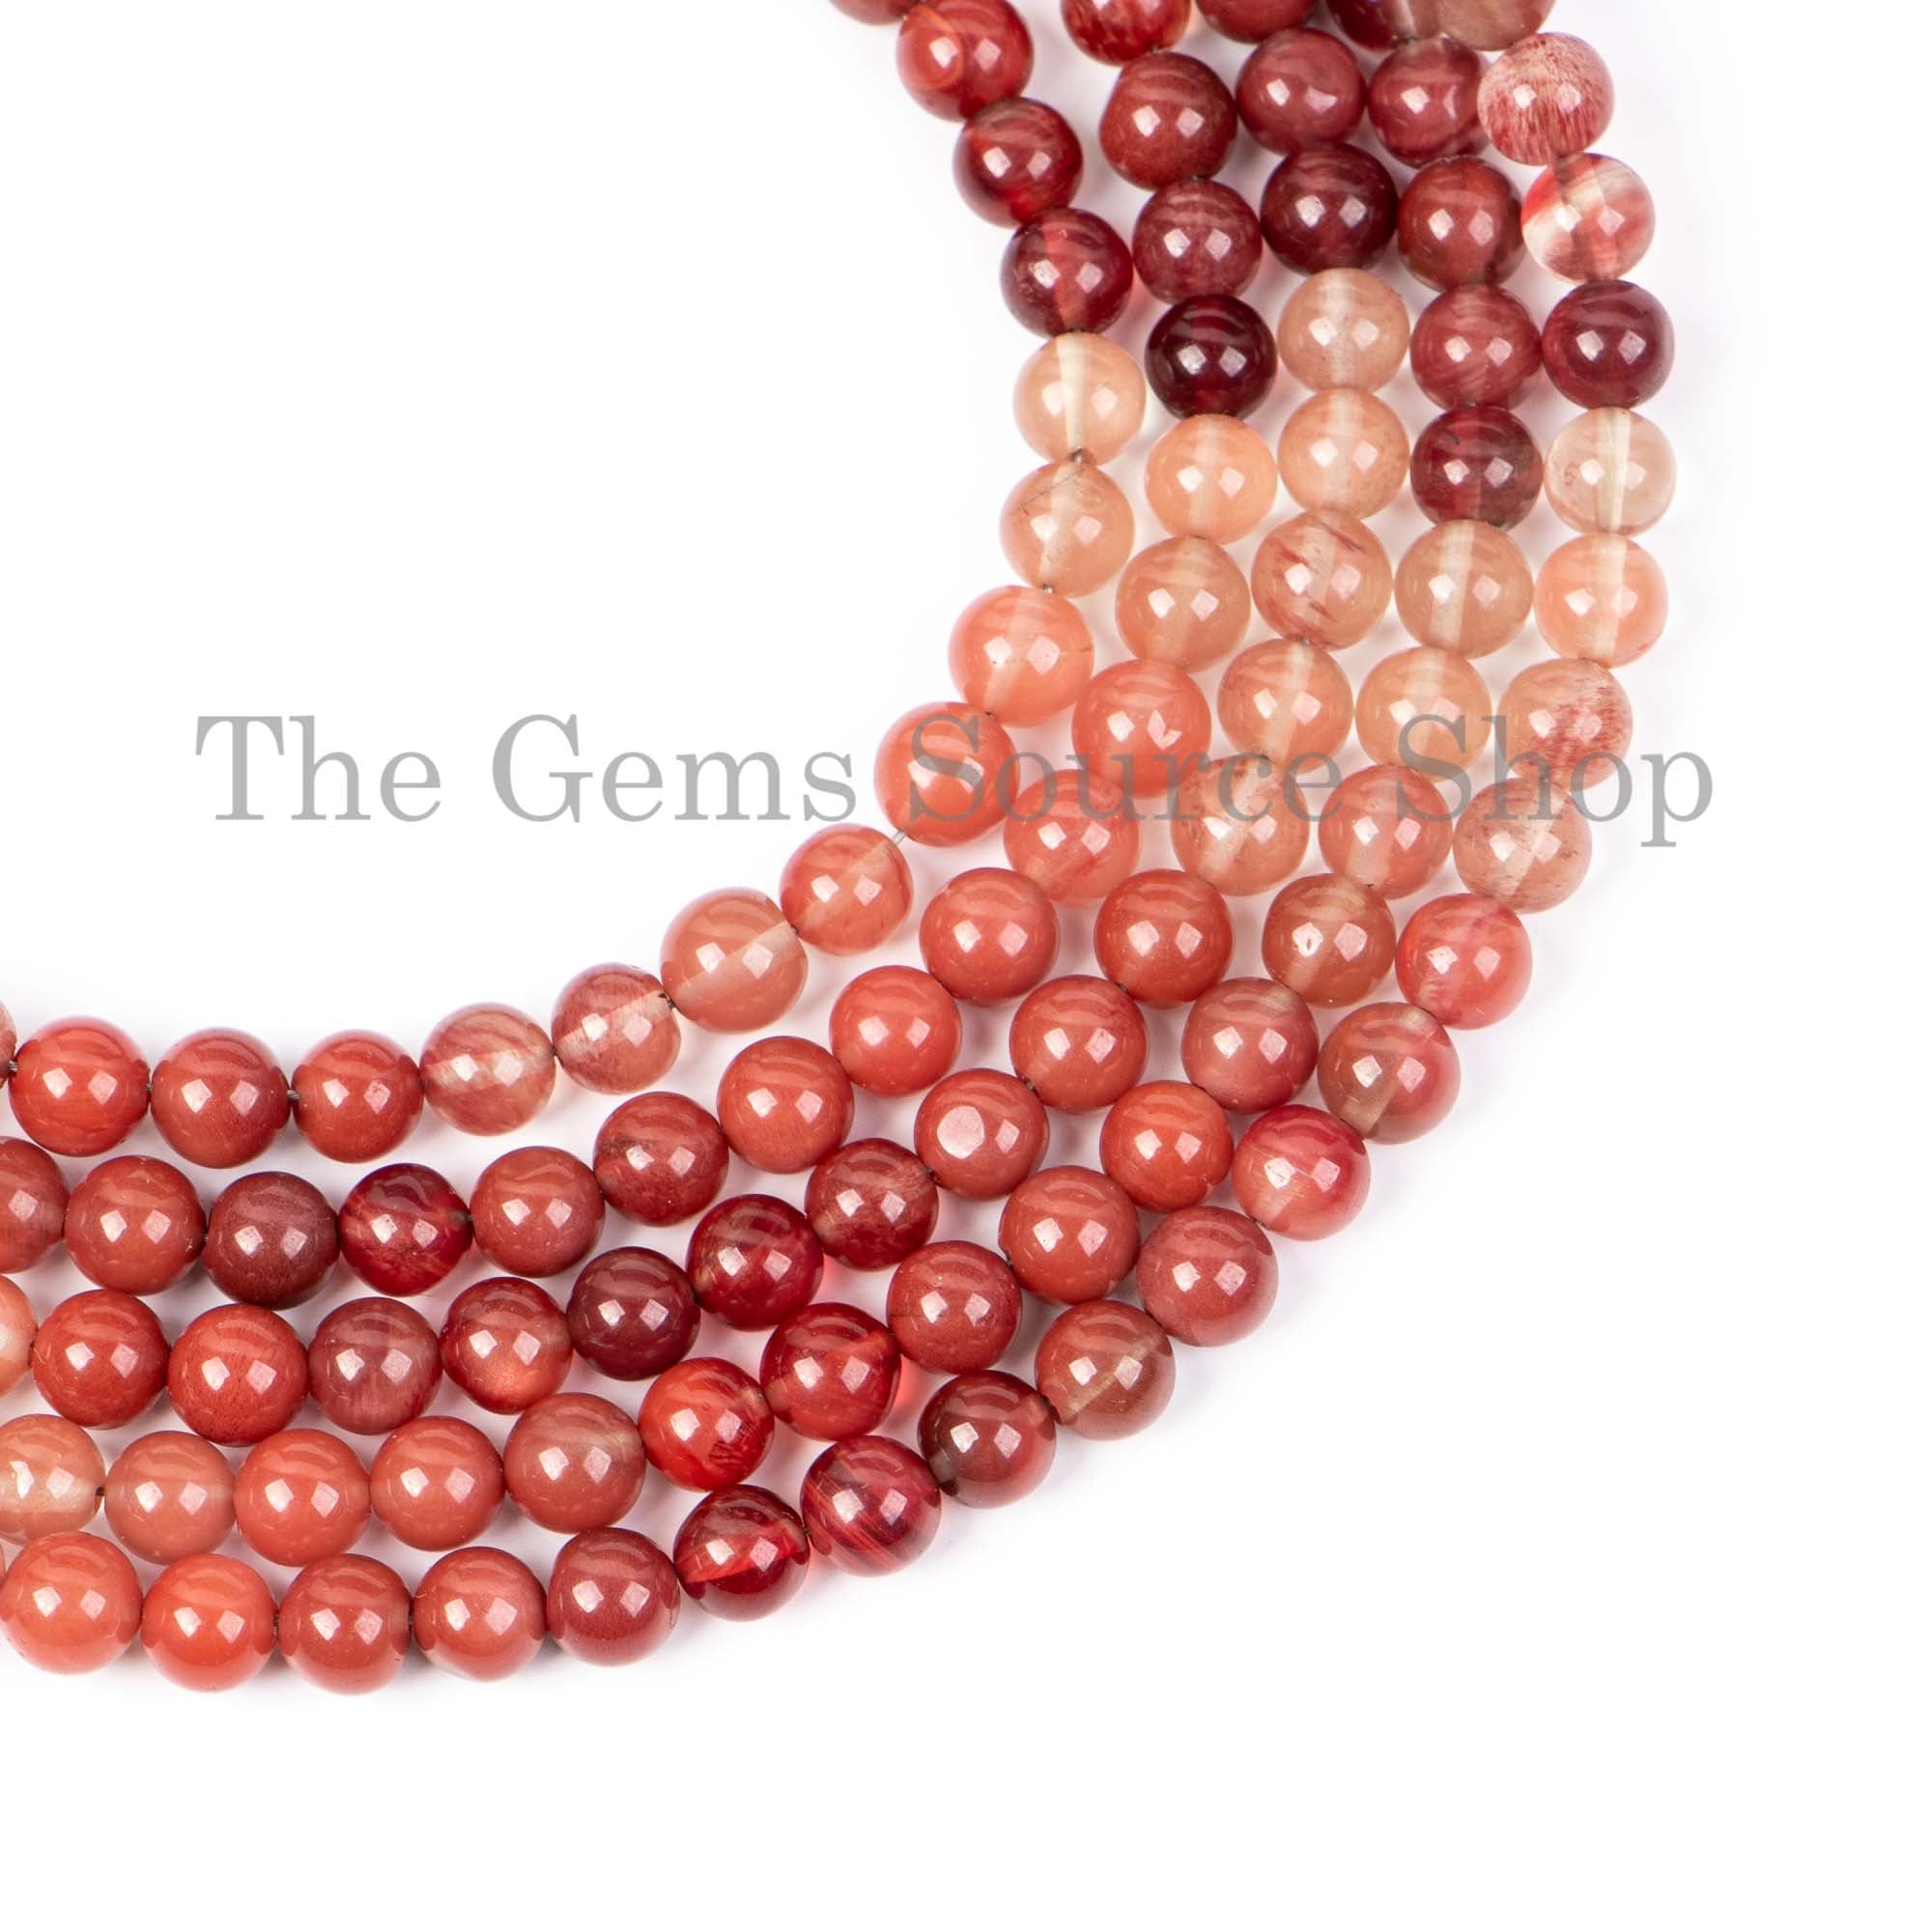 Andesine Labradorite Beads, Labradorite Smooth Round Beads, Plain Labradorite Beads, Gemstone Beads